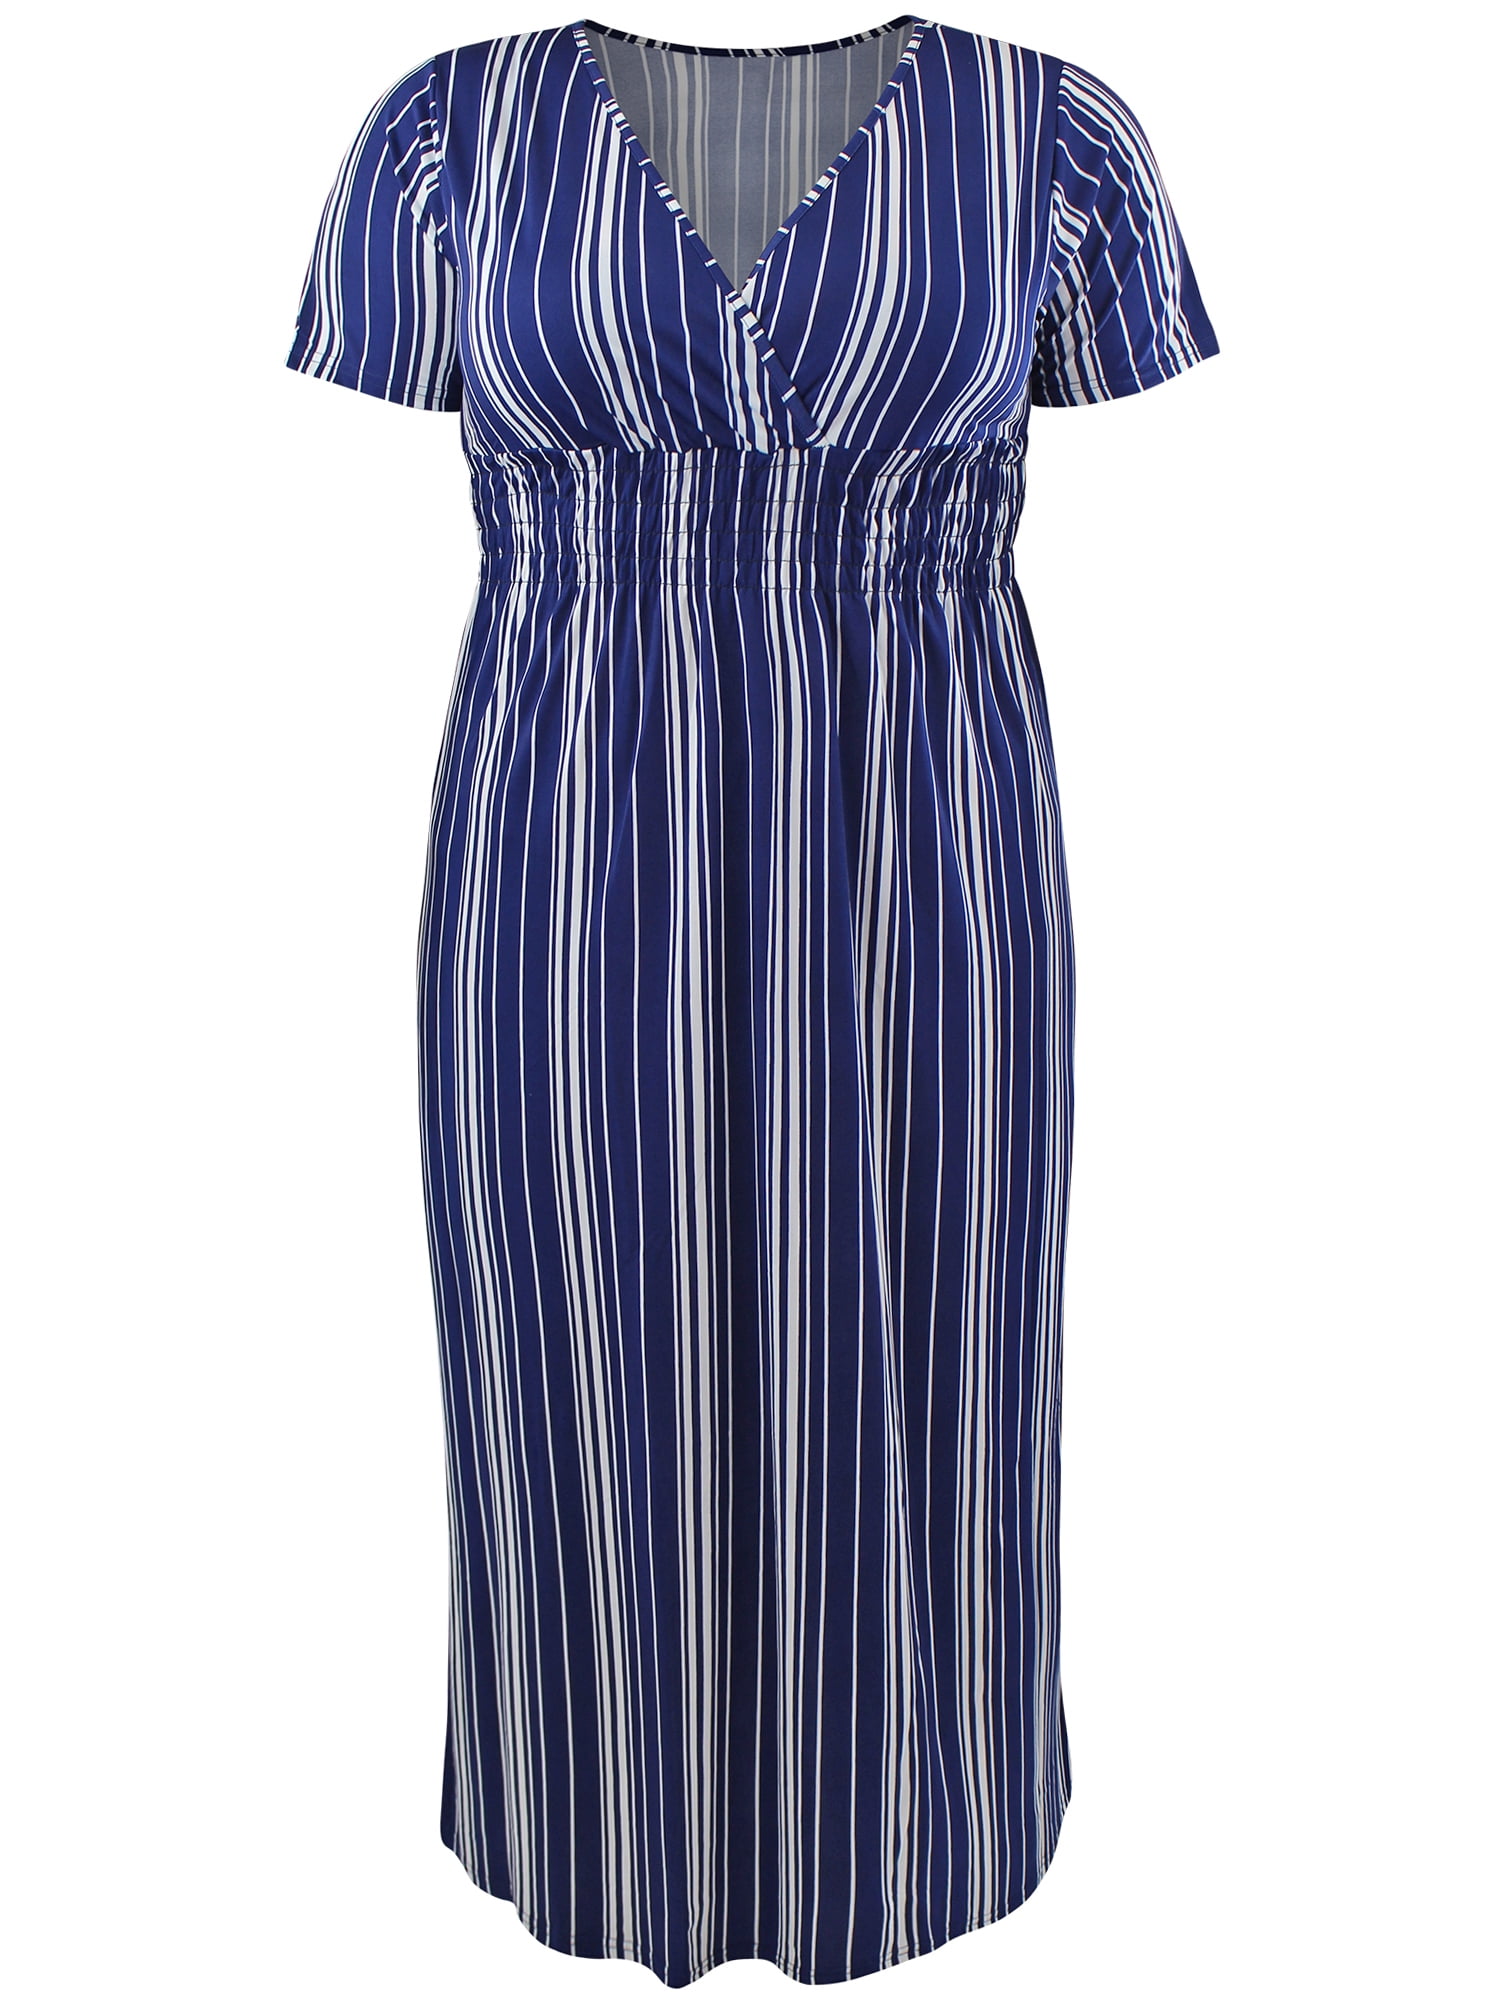 Plus Size Blue White Stripe Empire Waist Dress Size X-Large Walmart.com